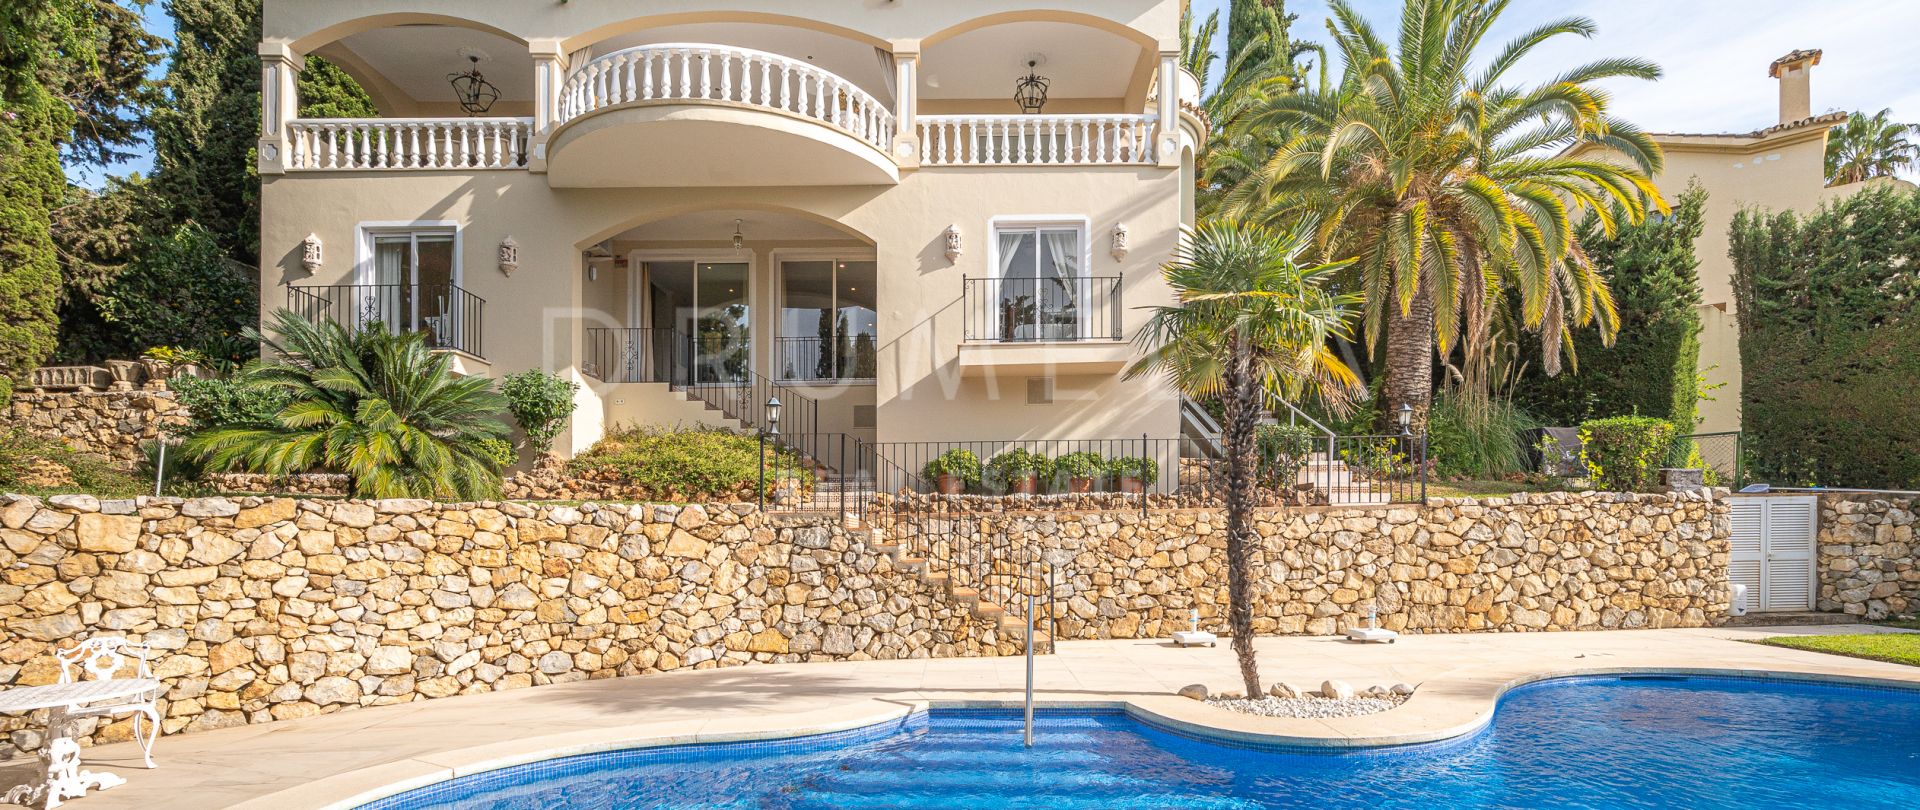 Remarkable classic Mediterranean luxury villa in Marbella Hill Club, Golden Mile of Marbella